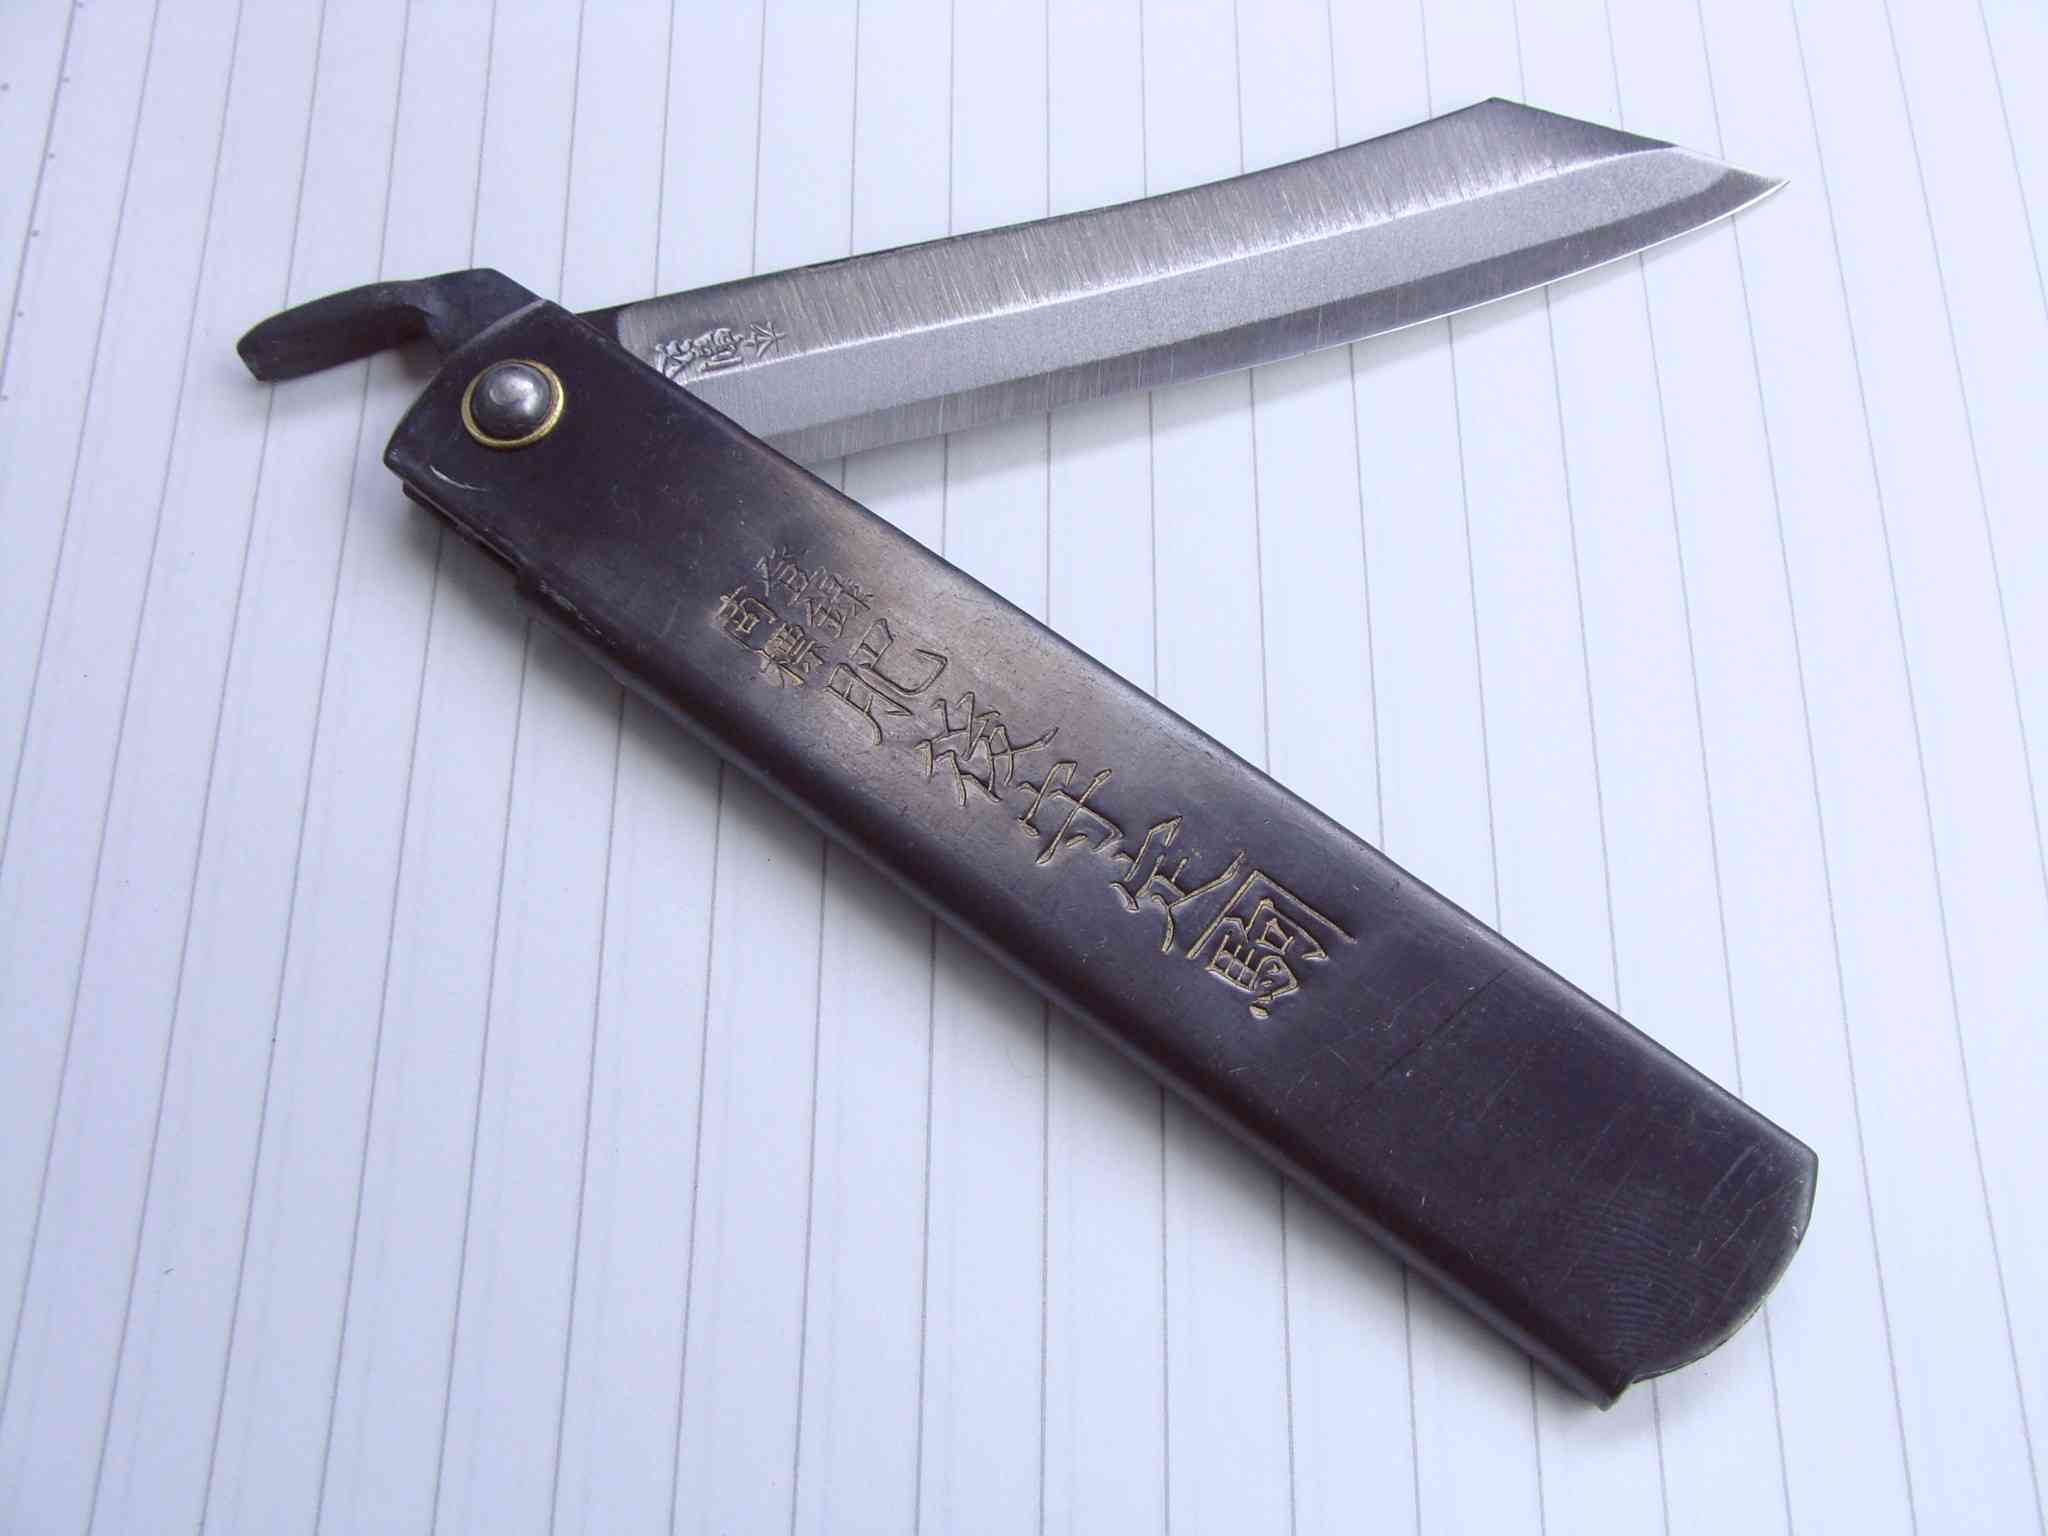 What is a Higonokami knife